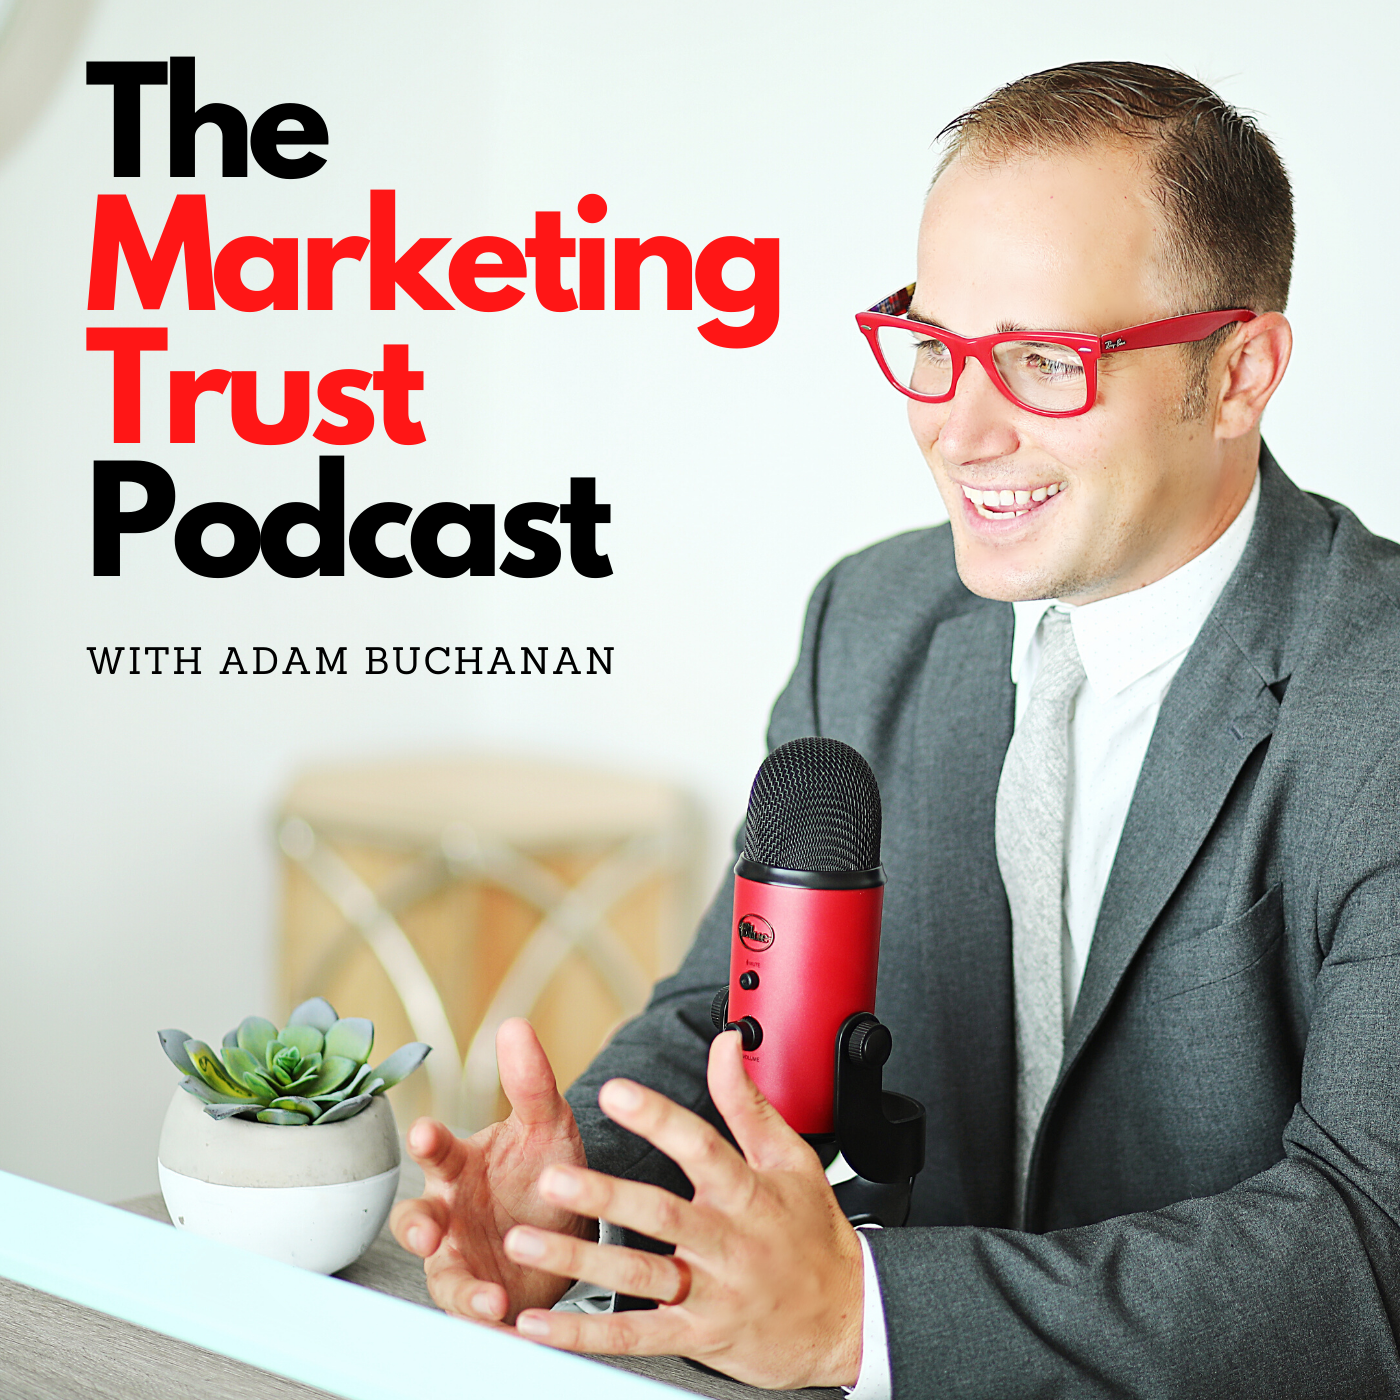 The Marketing Trust Podcast